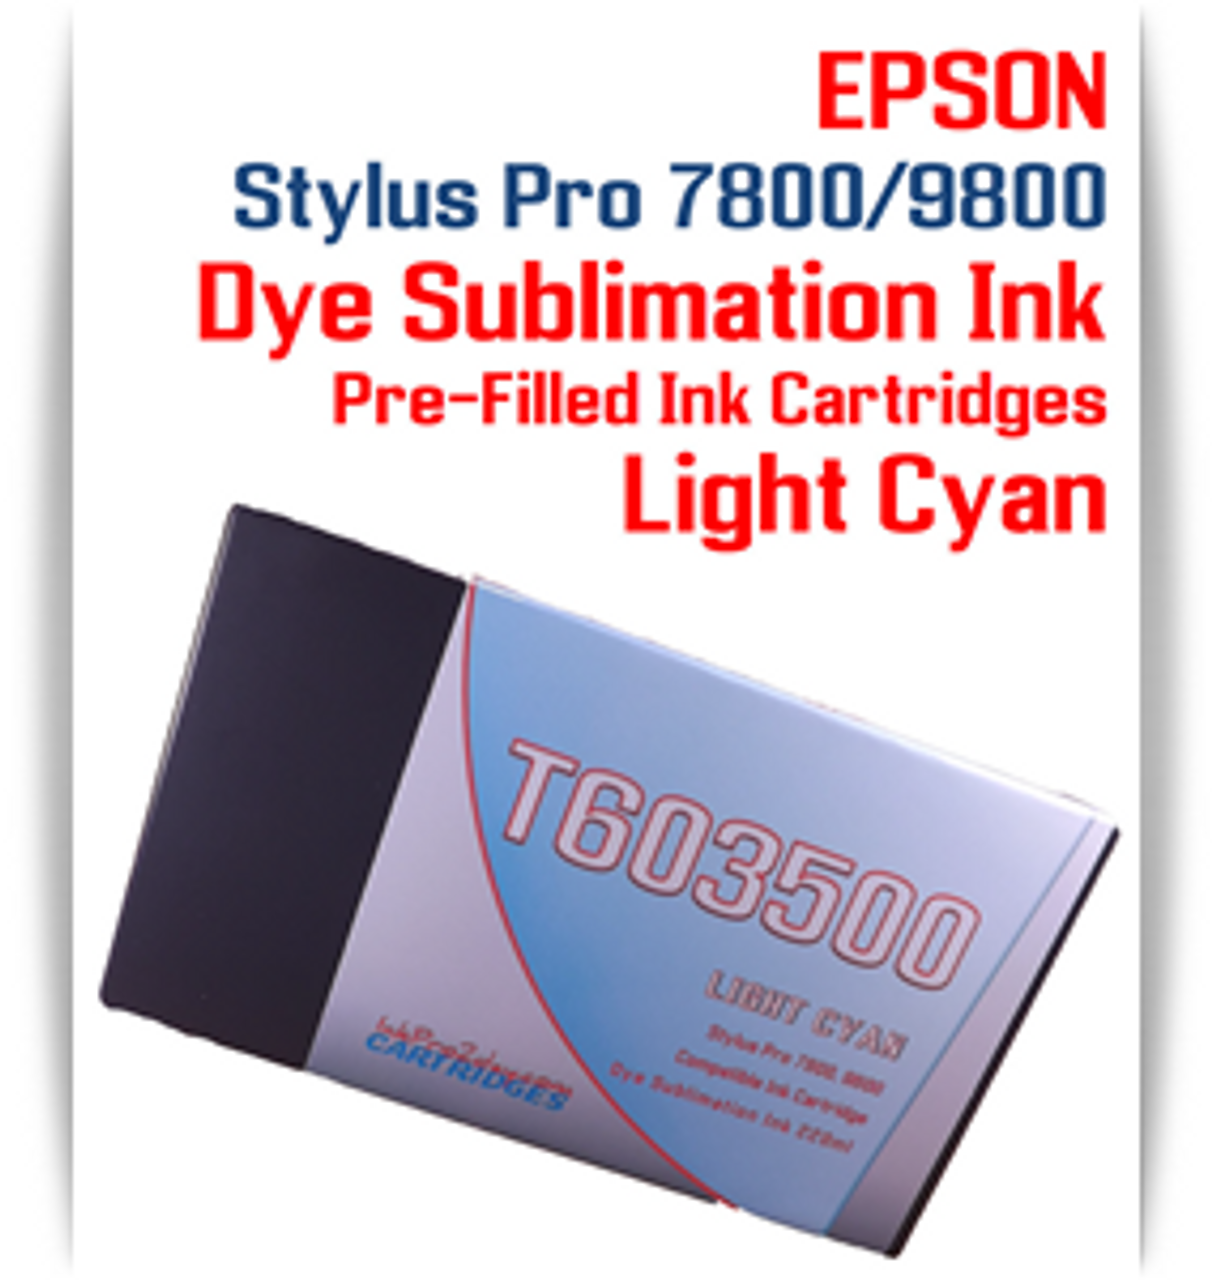 Light Cyan Epson Stylus Pro 7800/9800 Pre-Filled with Dye Sublimation Ink Cartridge 220ml each